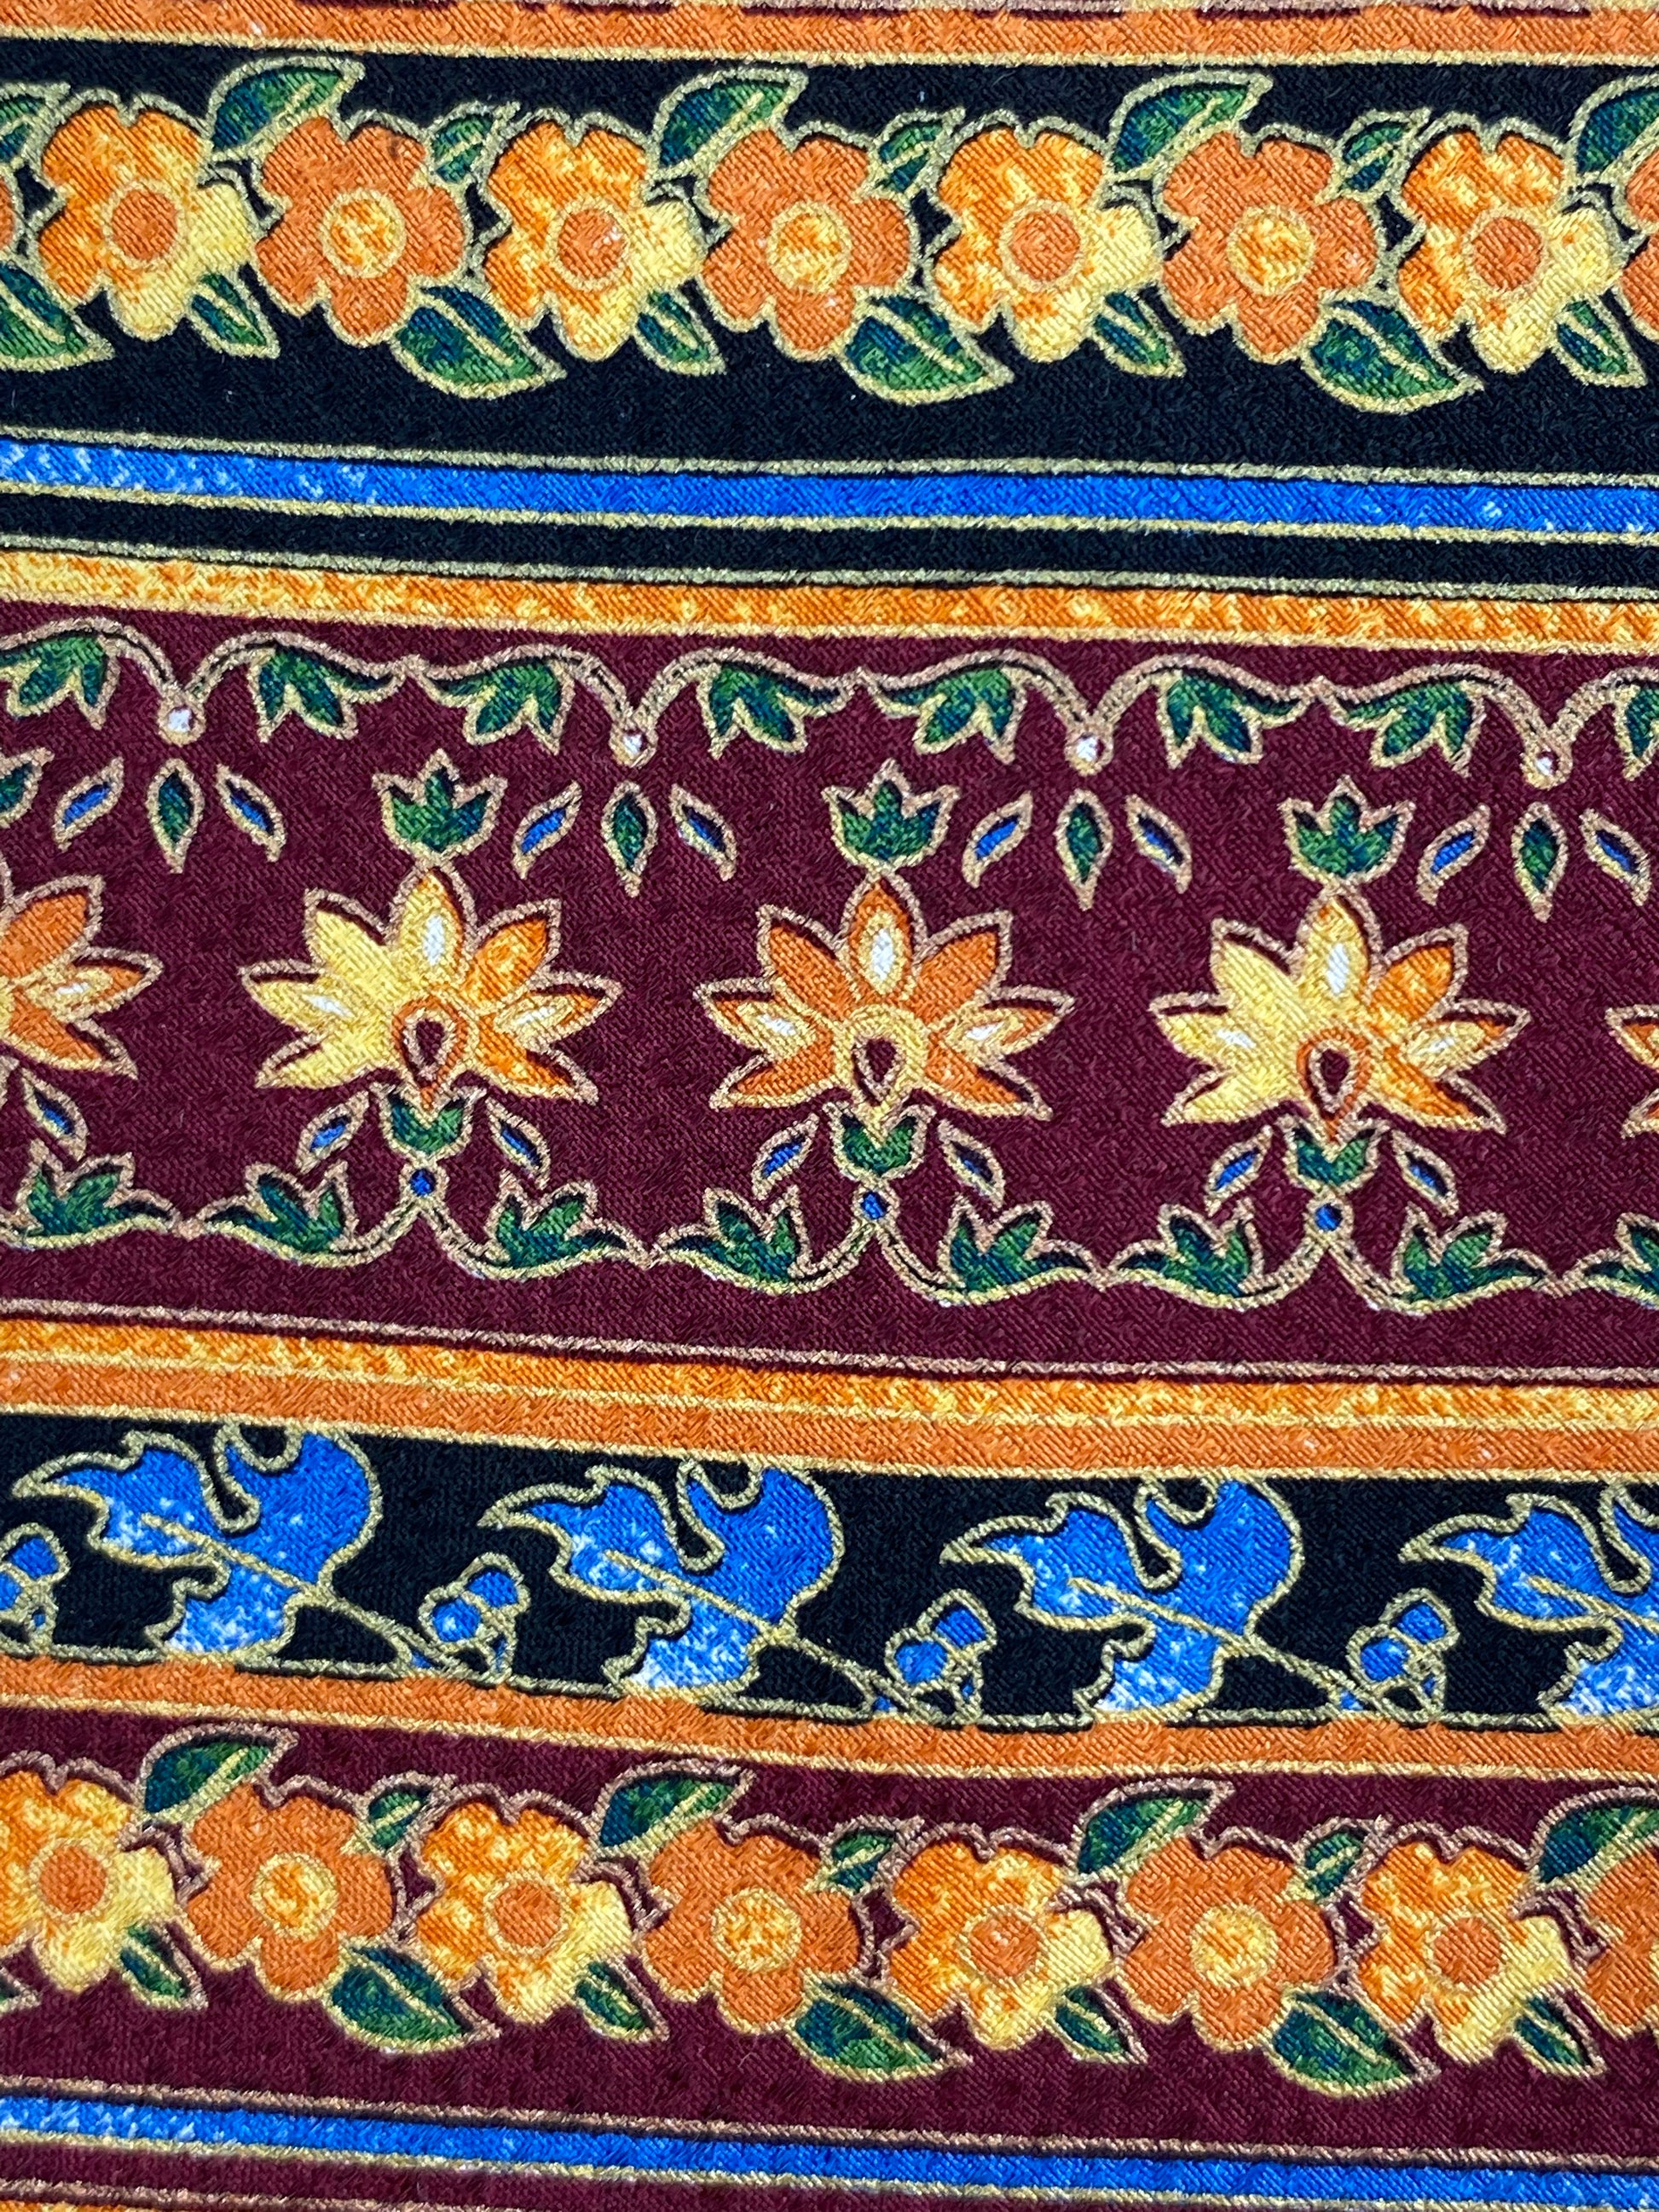 Close-up detail of: 90s Deadstock Silk Necktie, Men's Vintage Orange/ Maroon/ Blue Floral Horizontal Stripe Pattern Tie, NOS